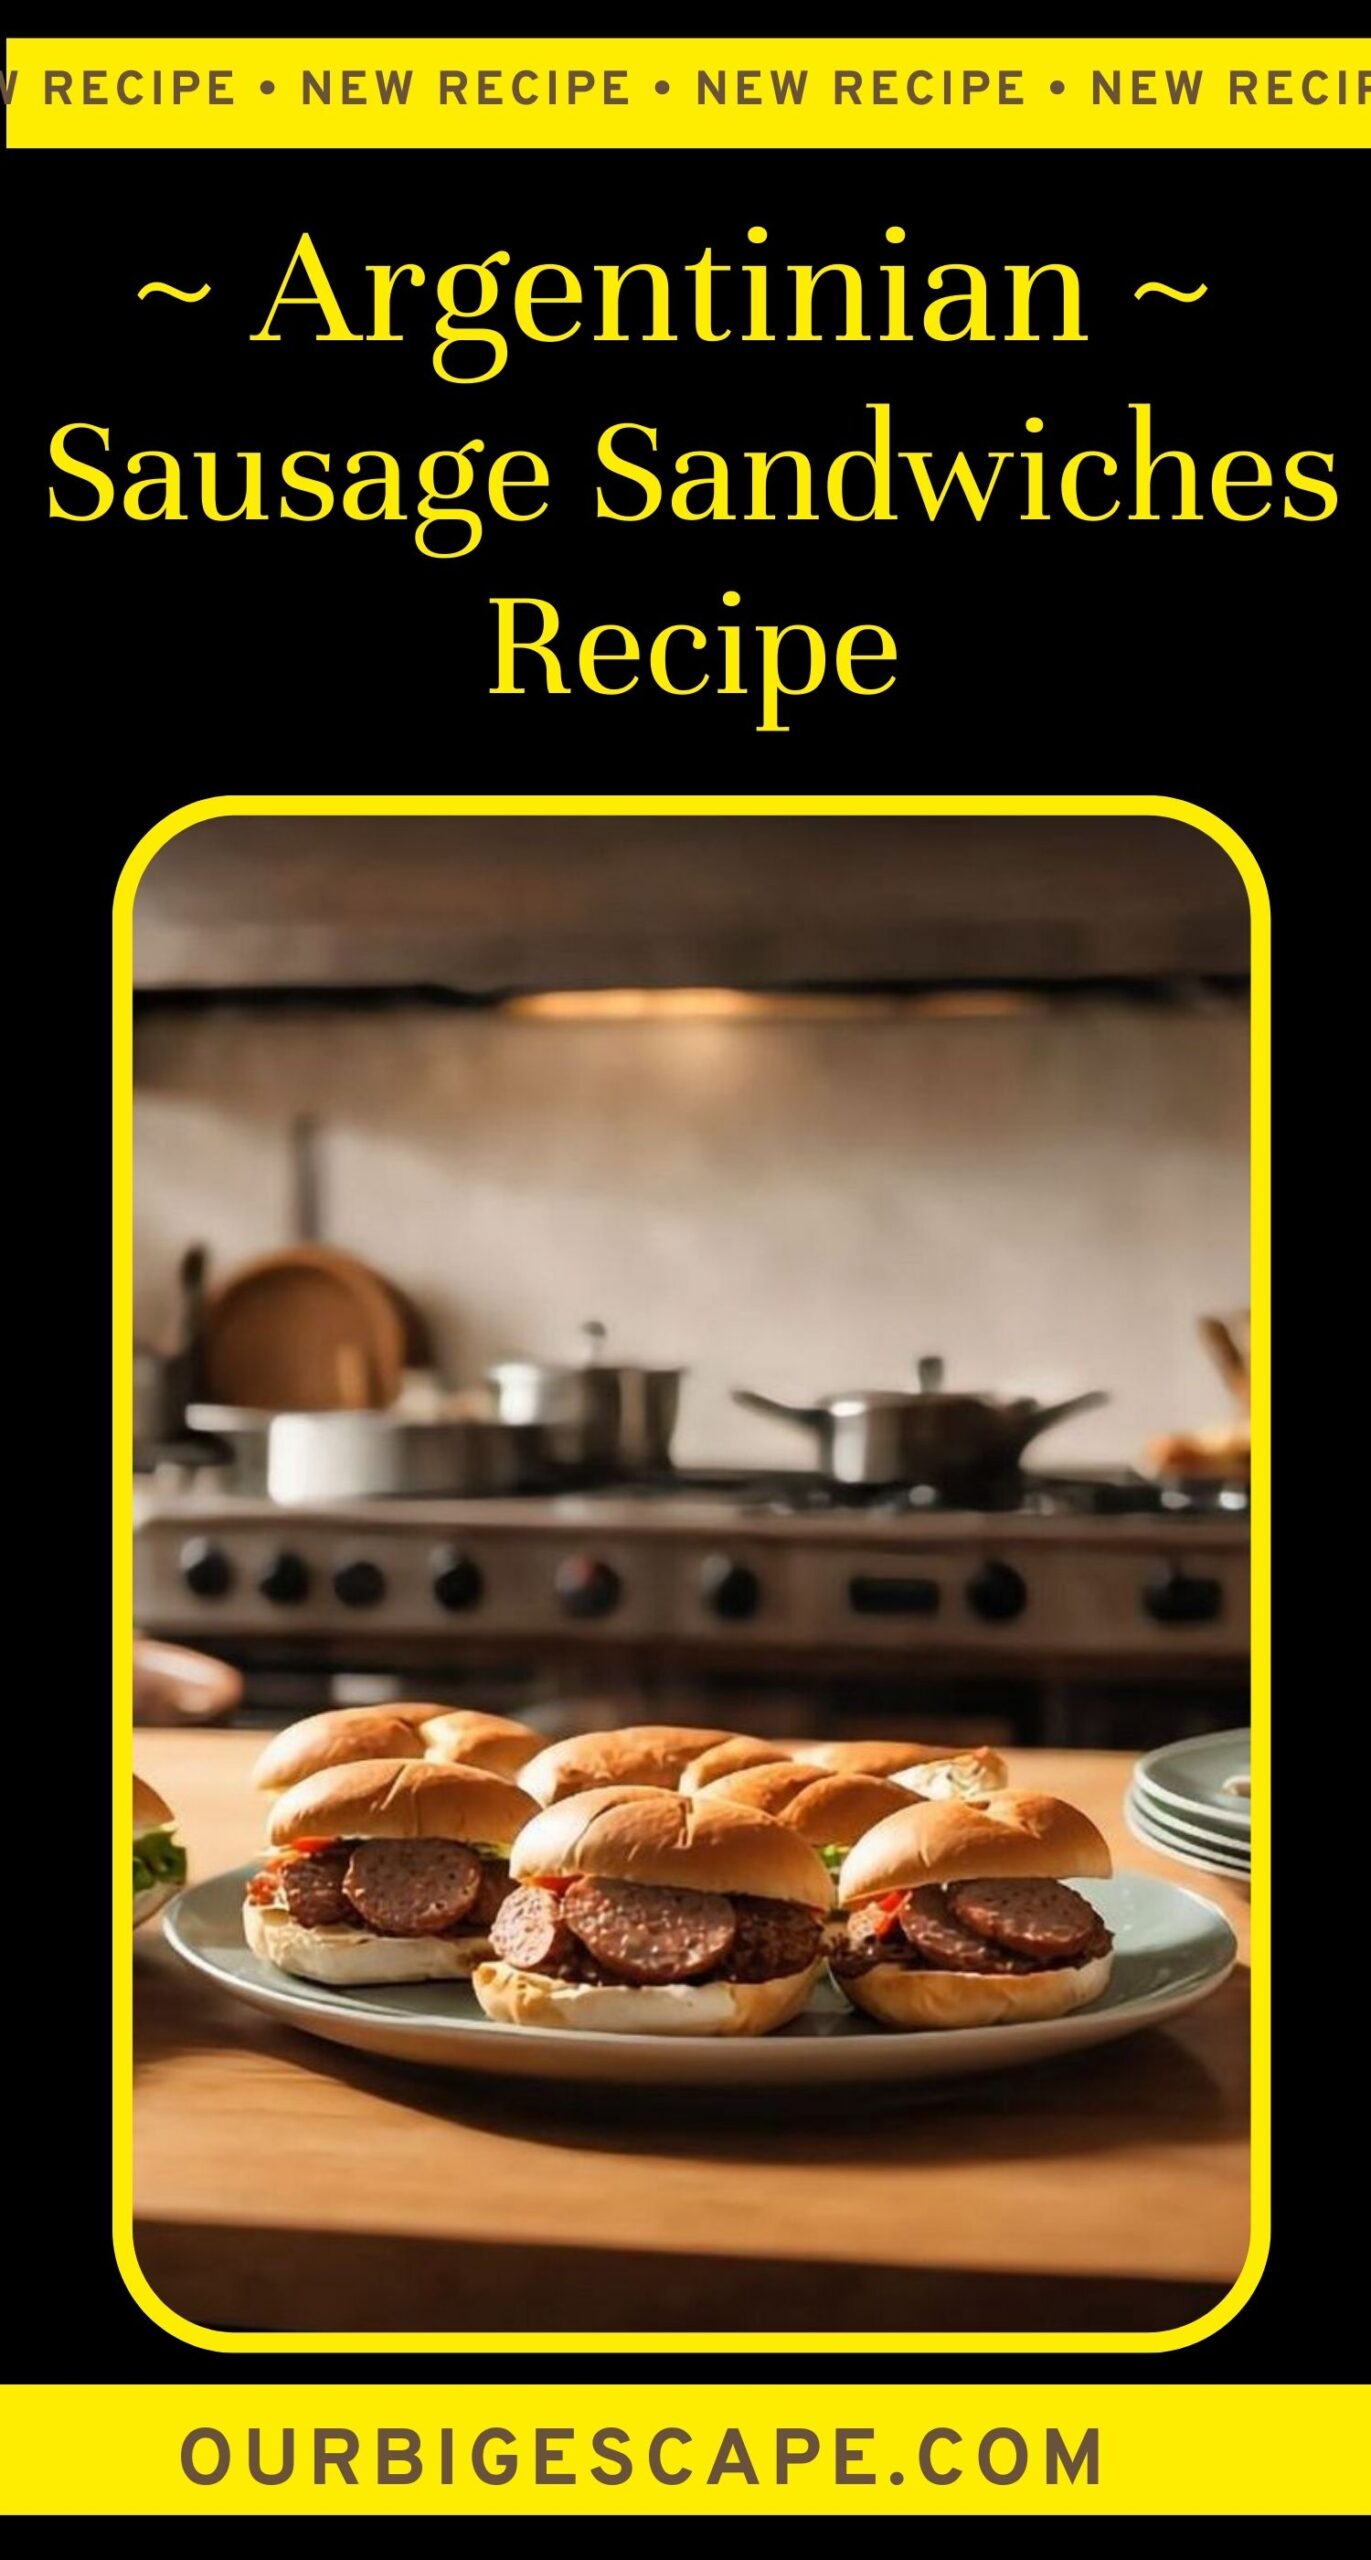 24. Argentinian Sausage Sandwiches Recipe